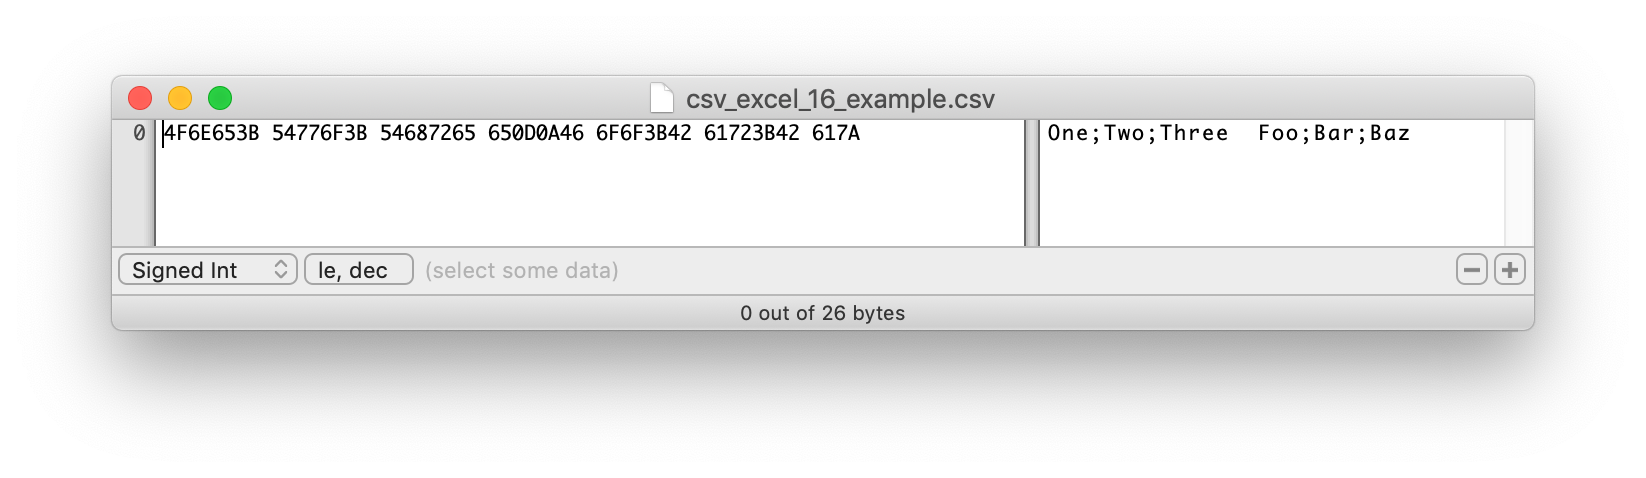 csv_excel_16_example.csv